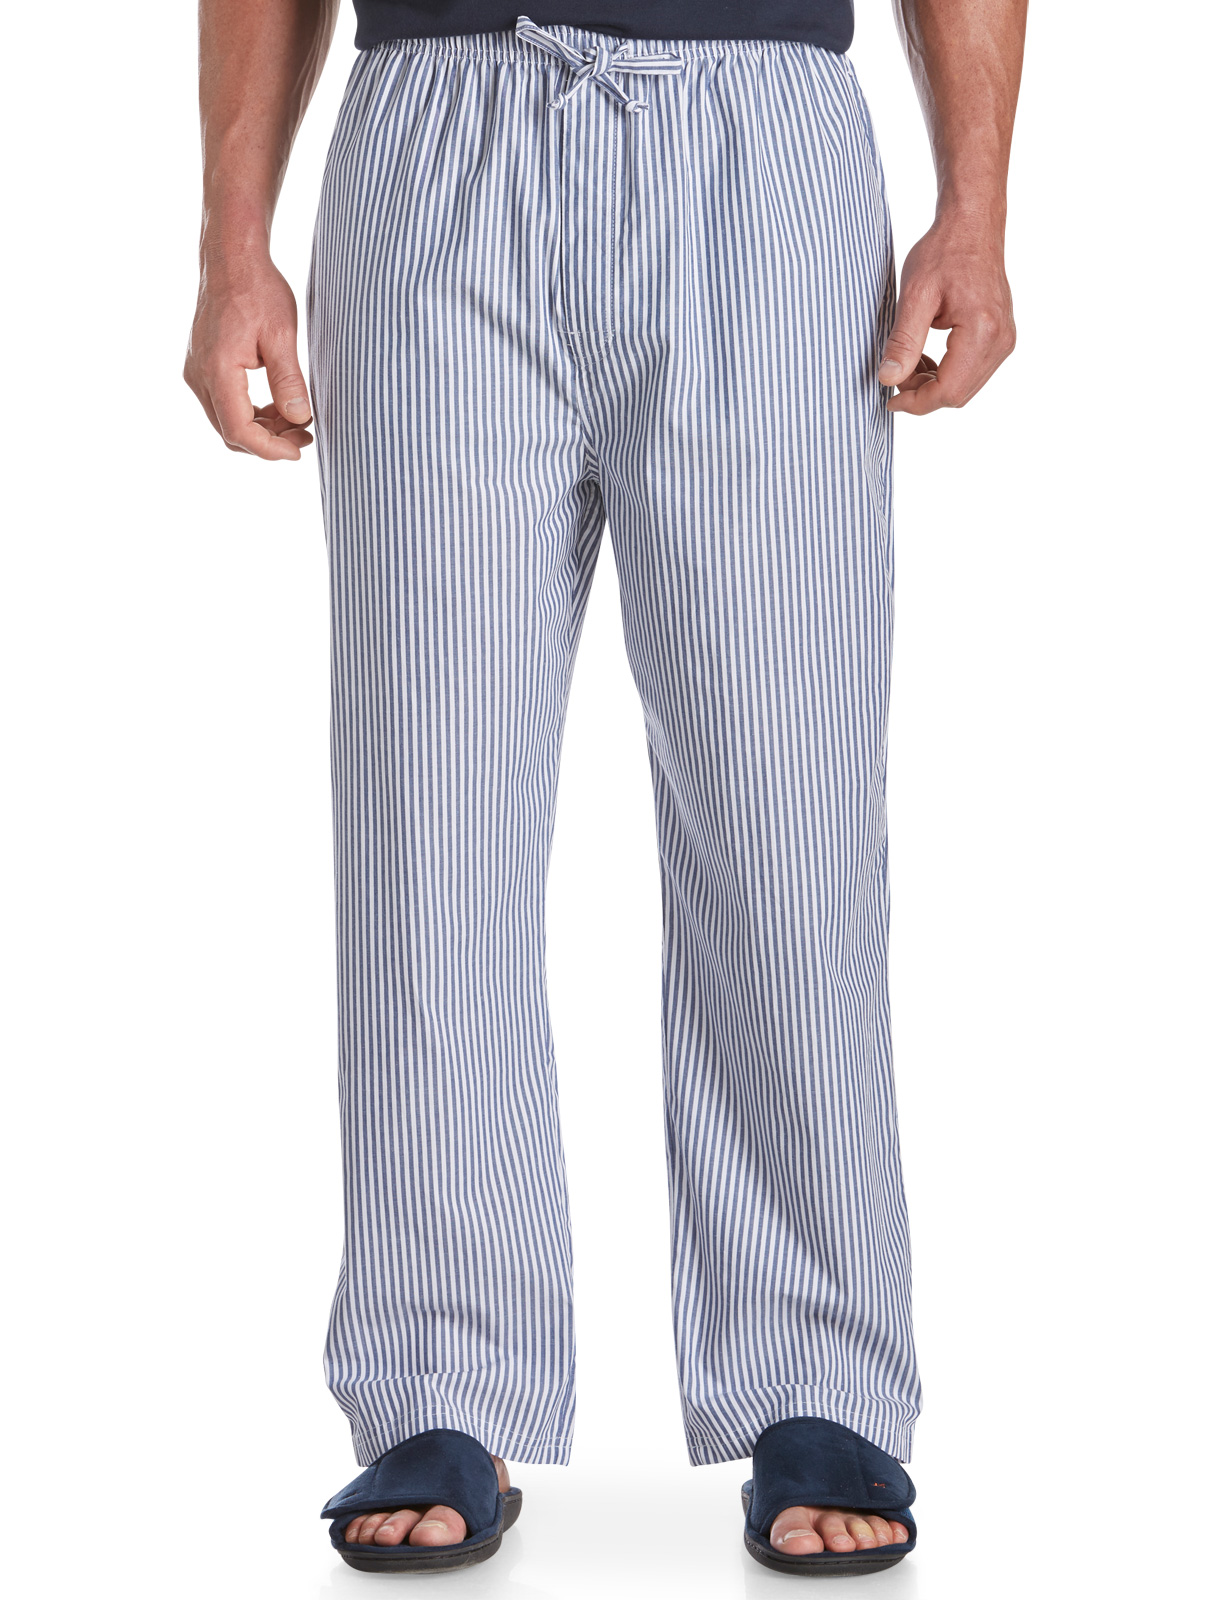 Harbor Bay Men's Big and Tall Stripe Lounge Pants